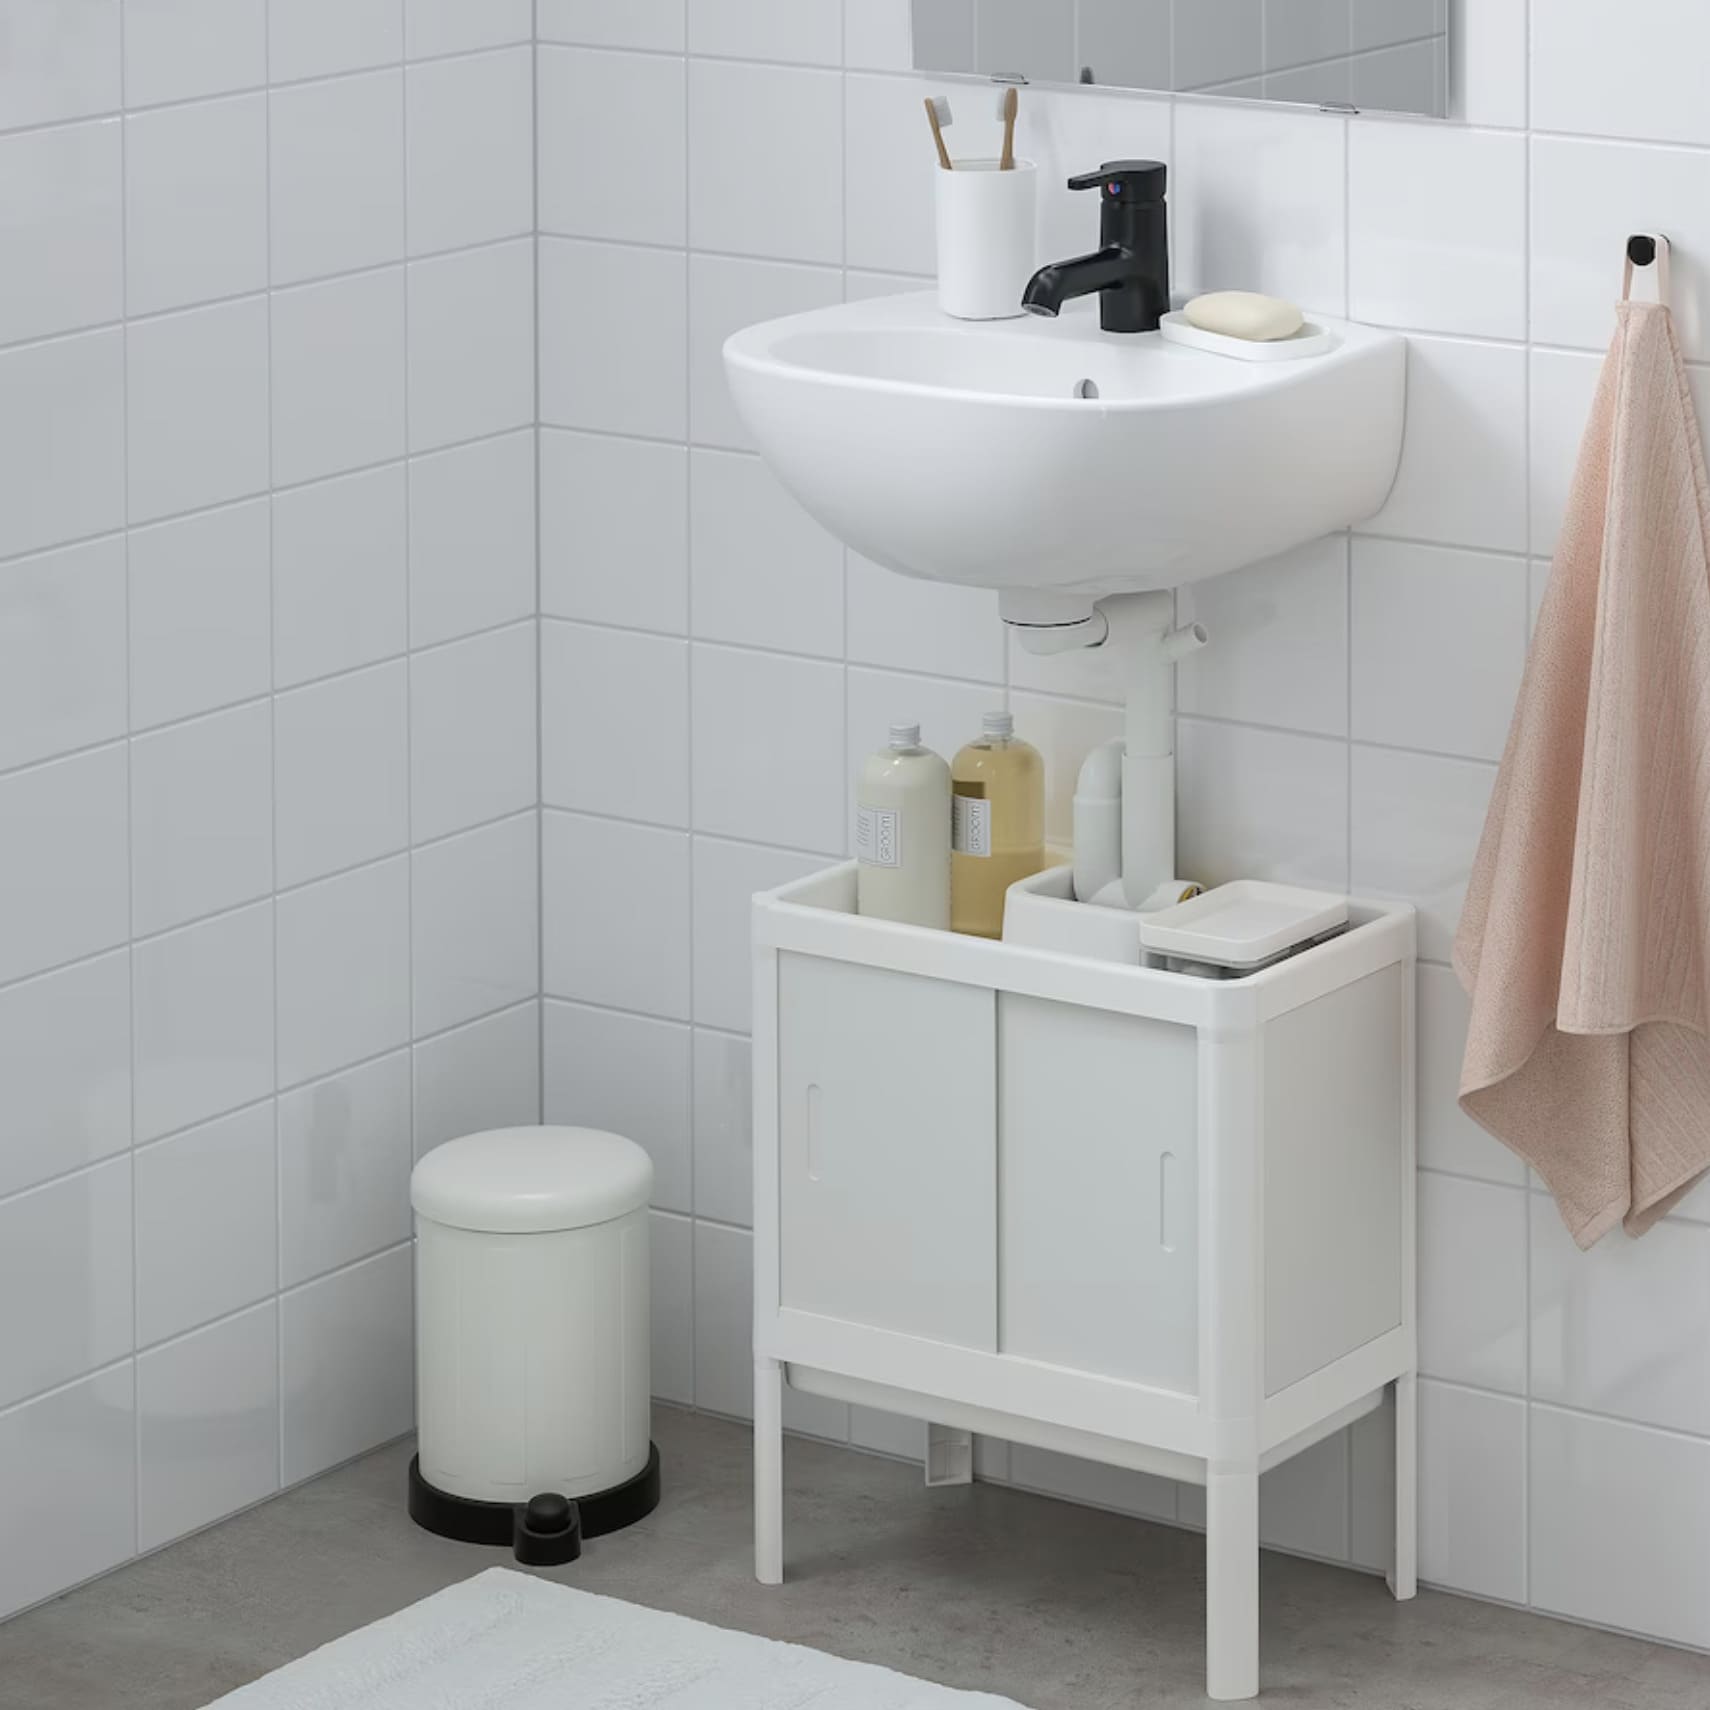 Mueble para baño de IKEA